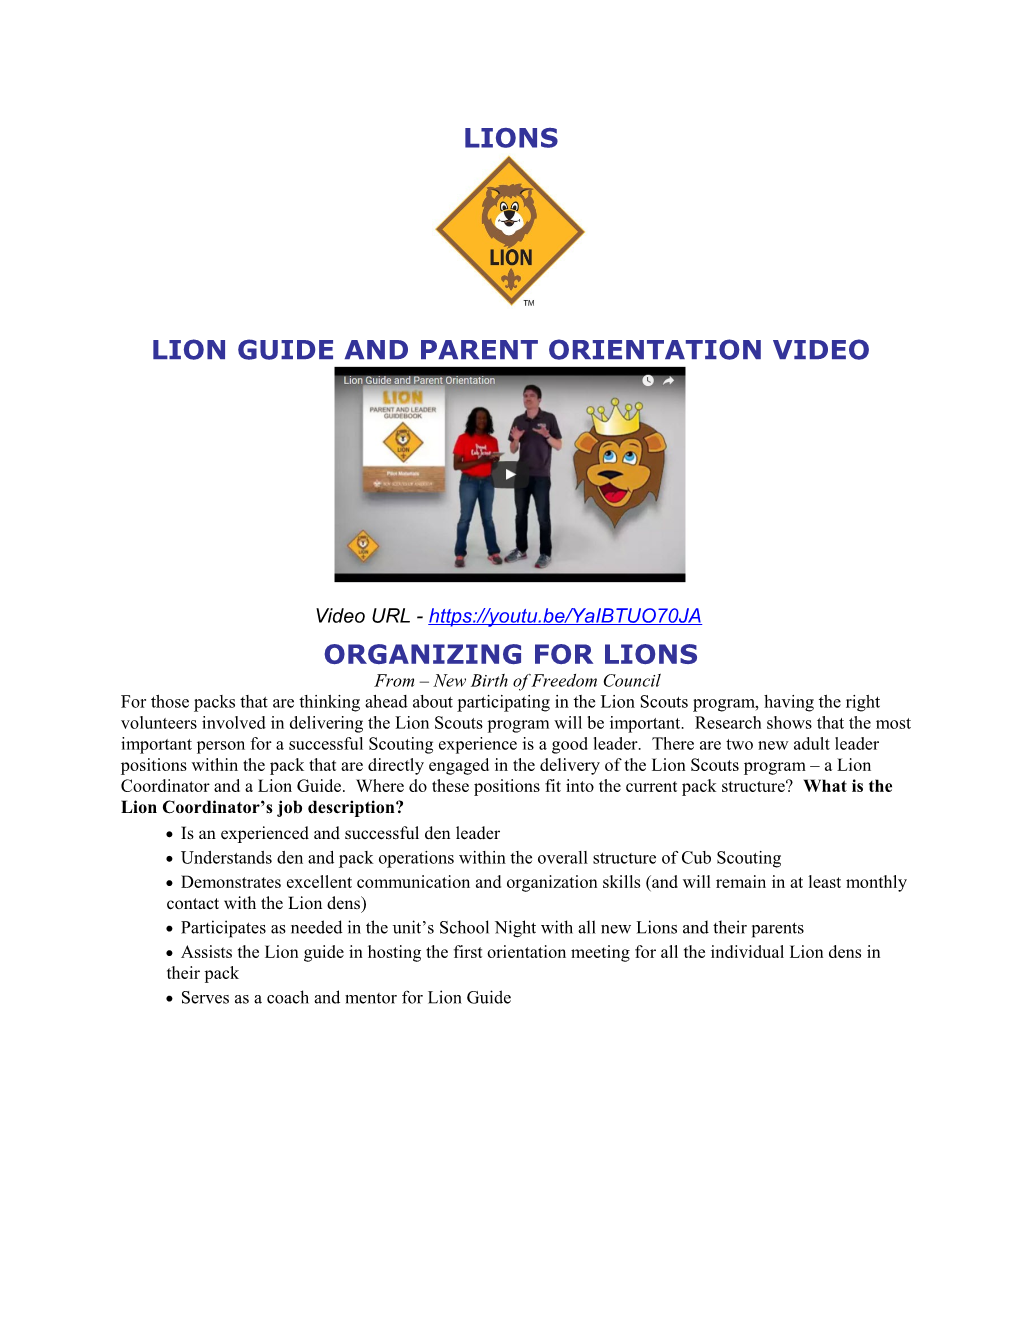 Lion Guide and Parent Orientation Video